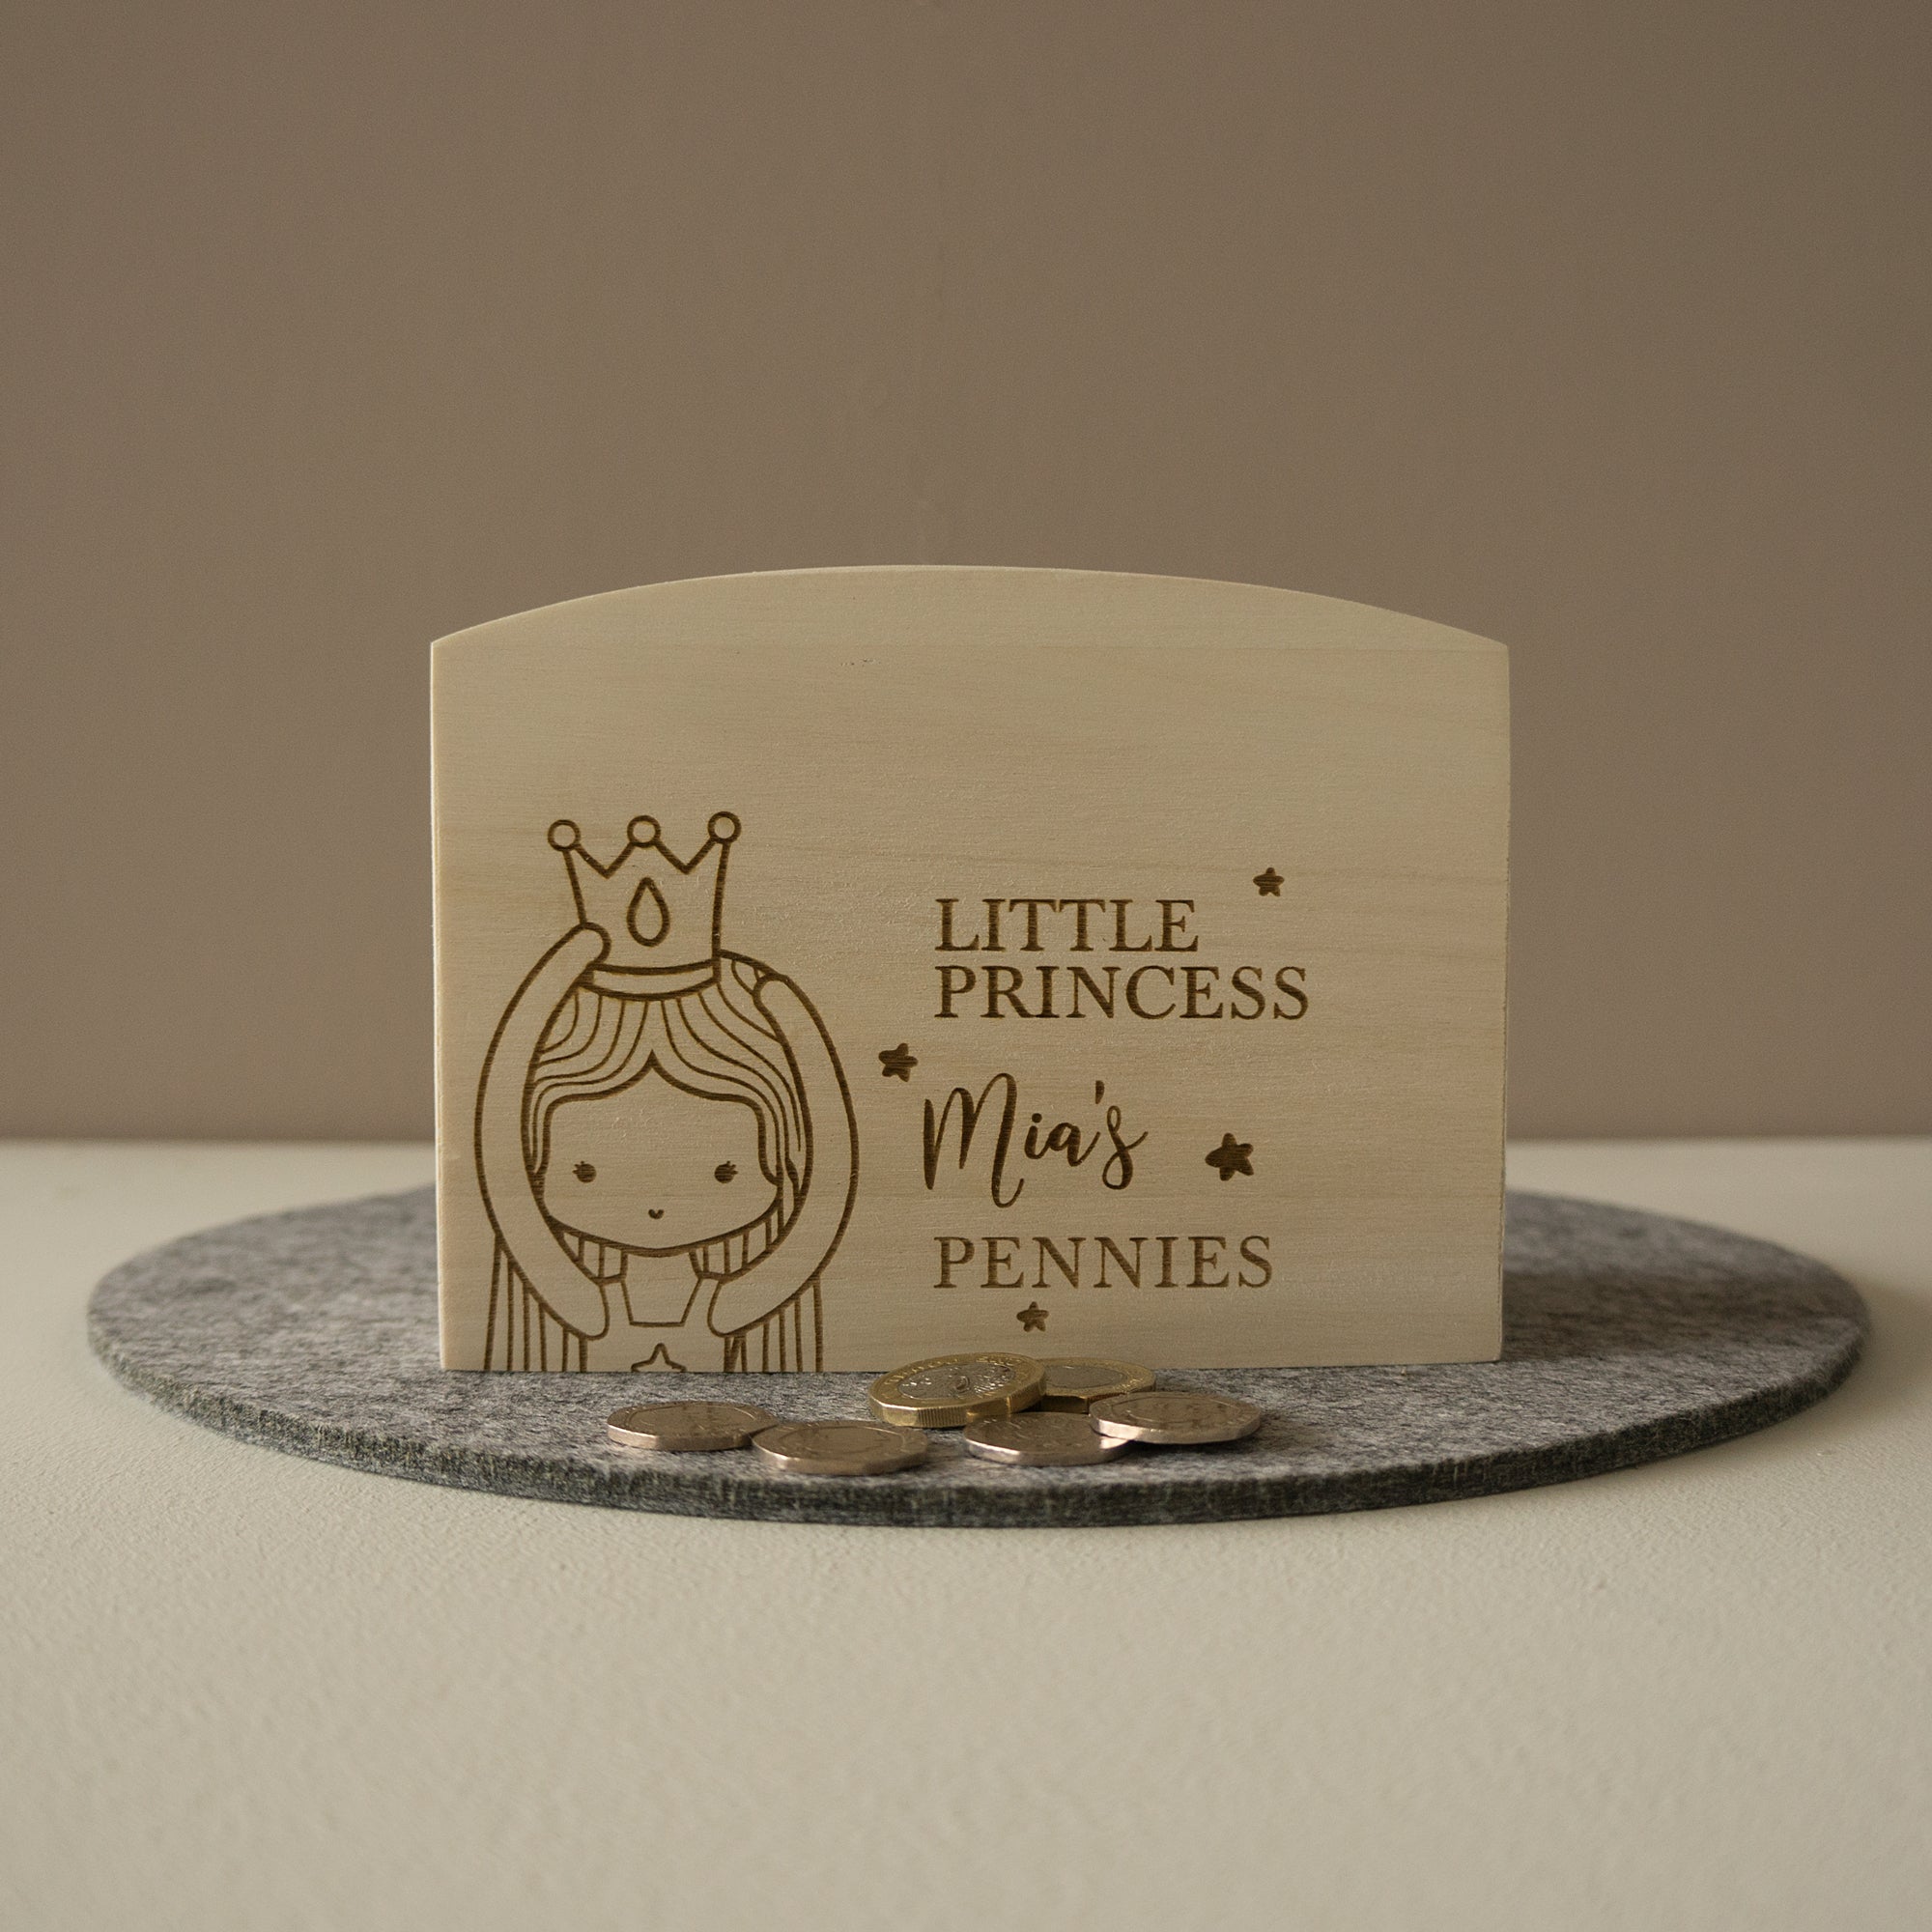 Little princess money box